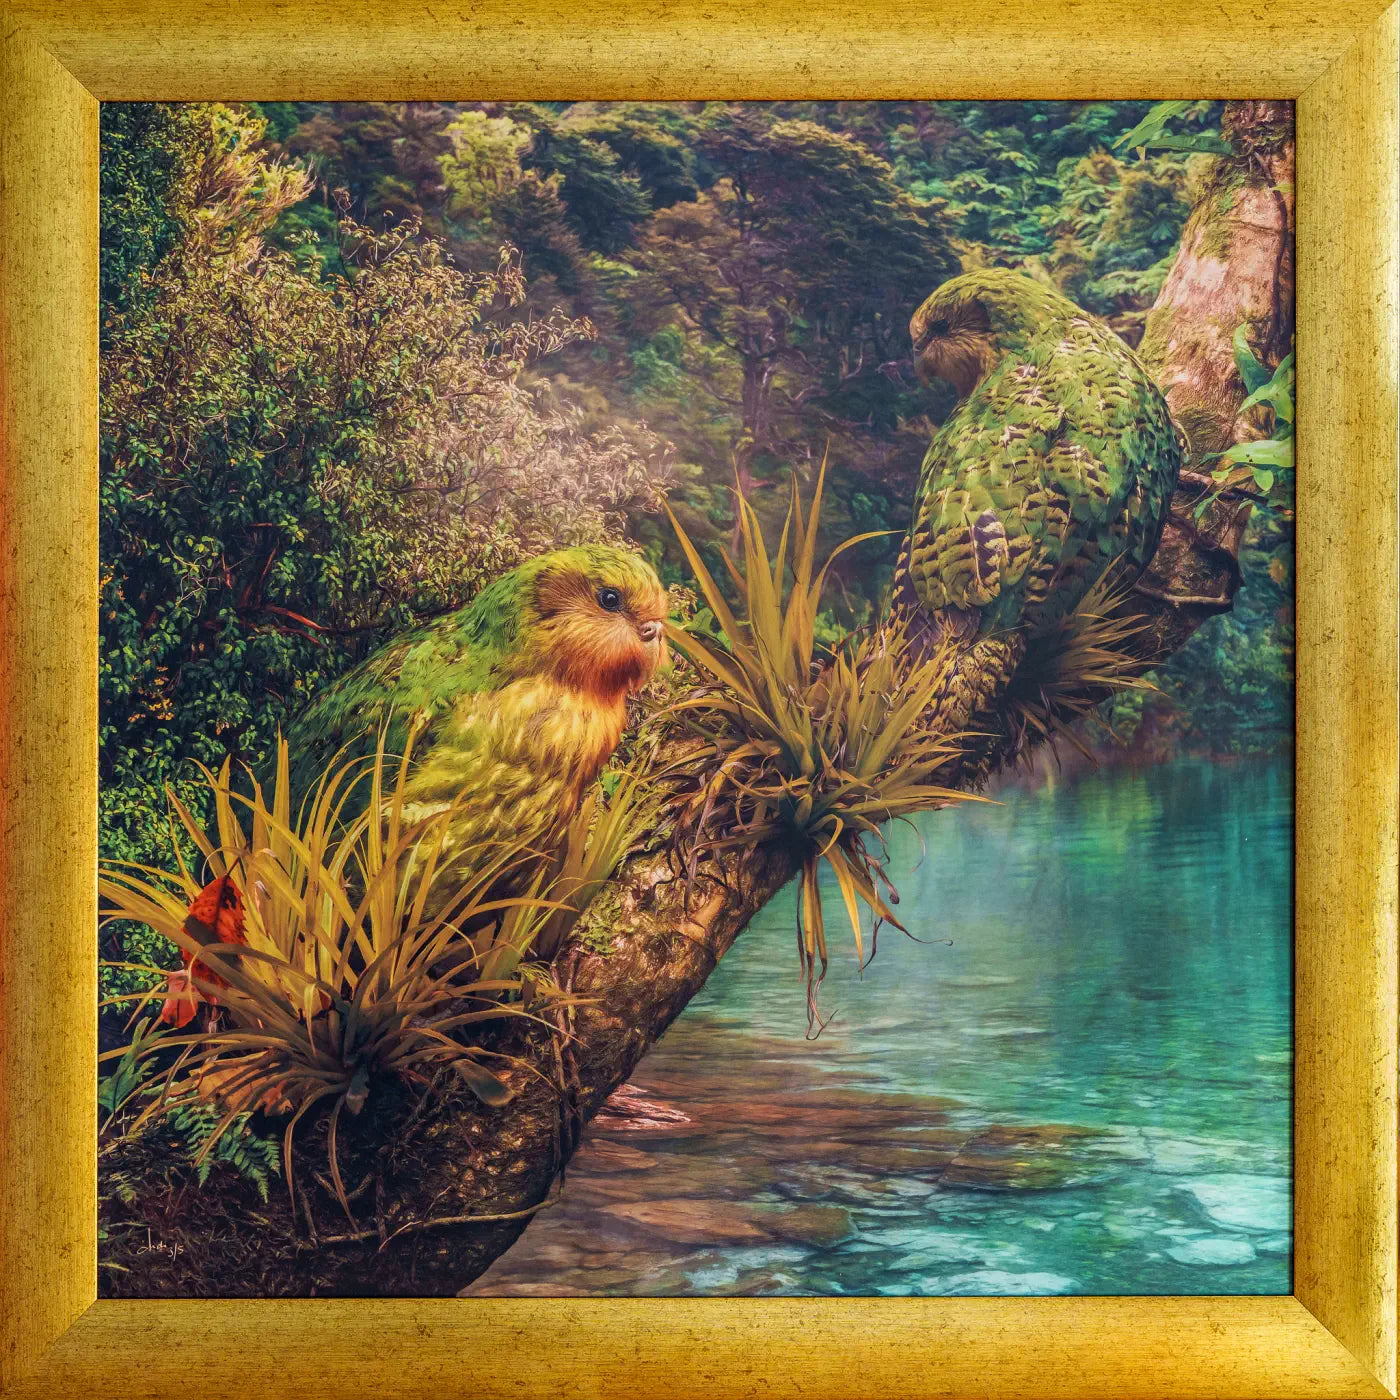 kakapo artwork with large gold frame